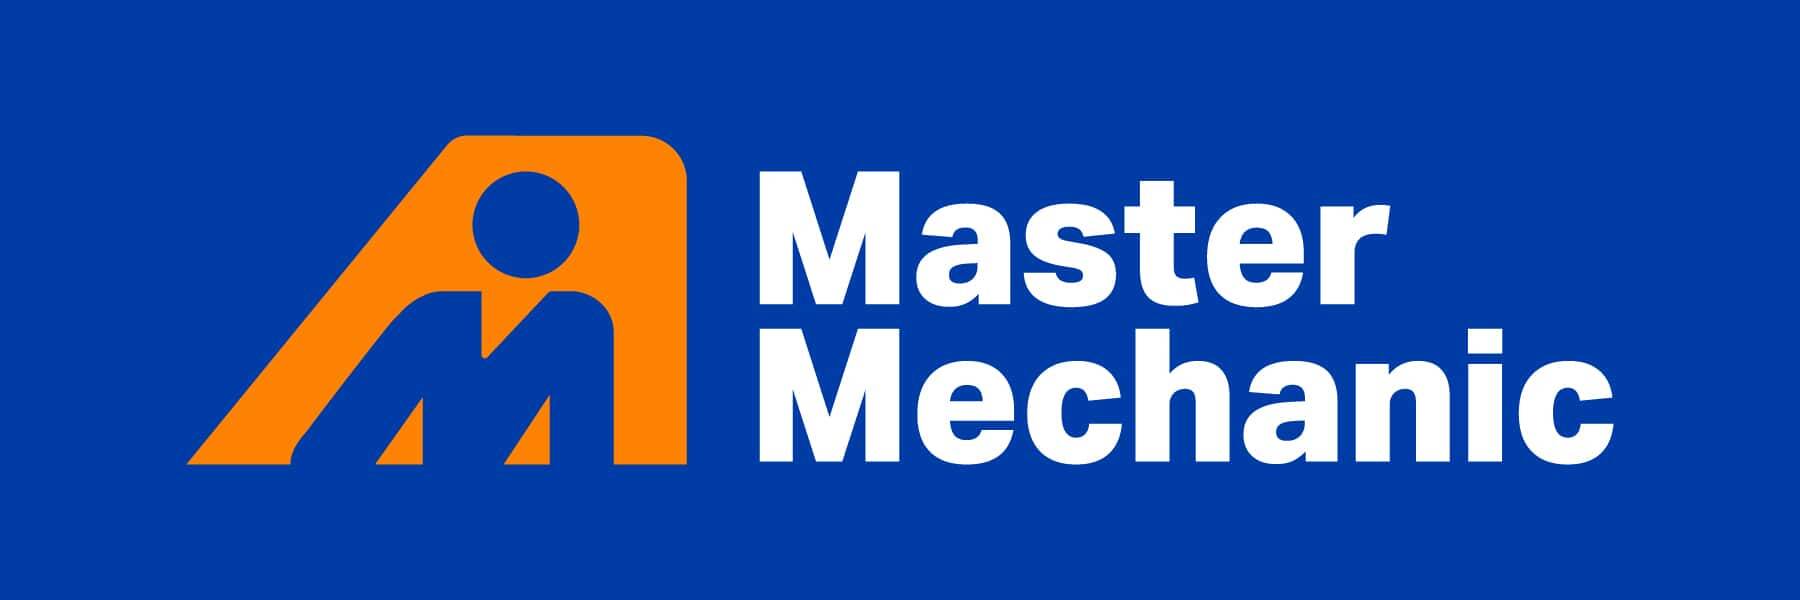 Master Mechanic